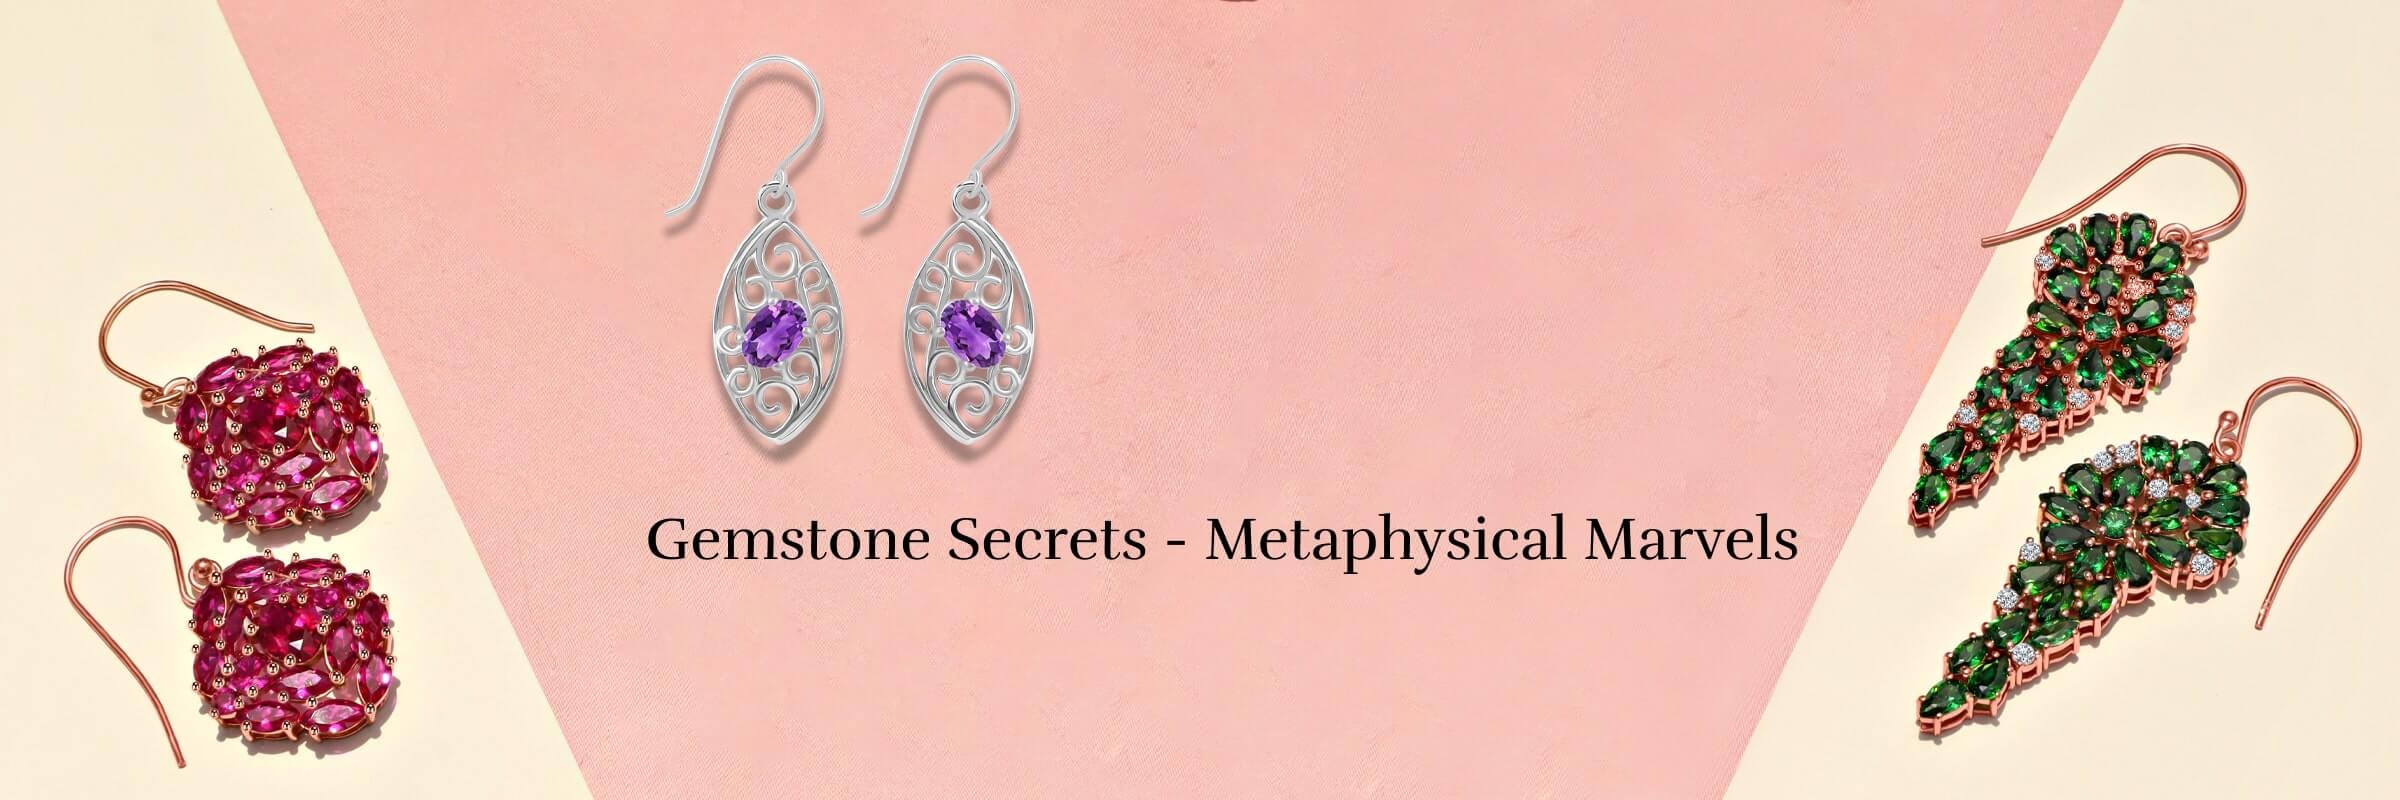 Metaphysical properties of gemstone